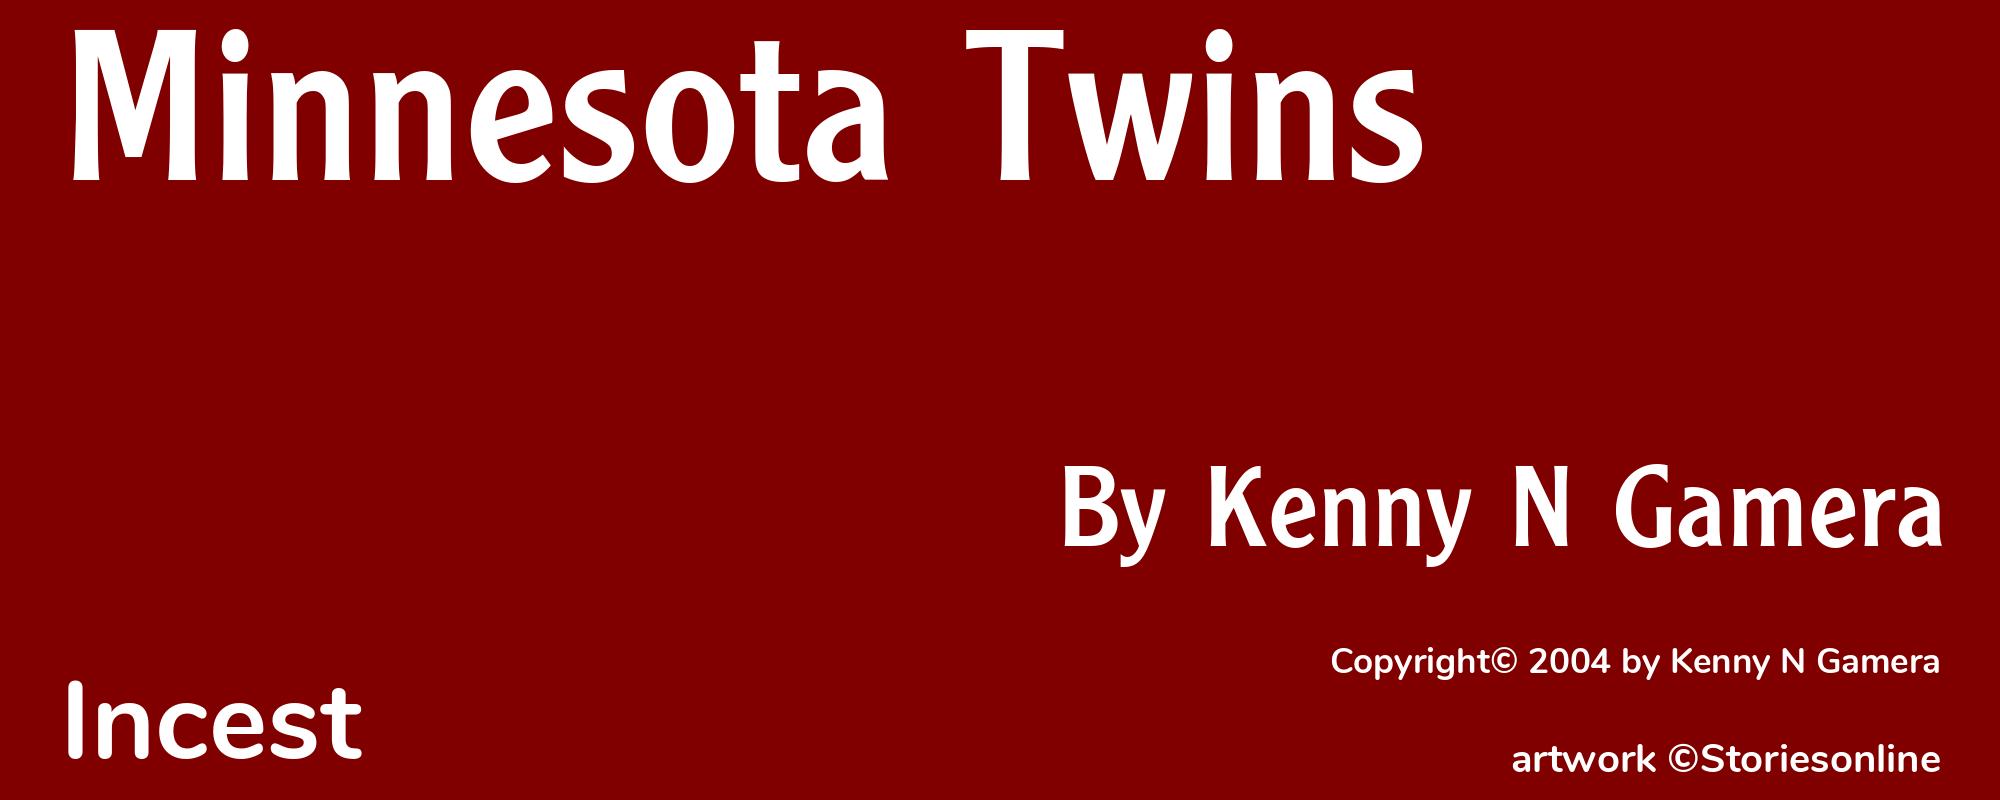 Minnesota Twins - Cover